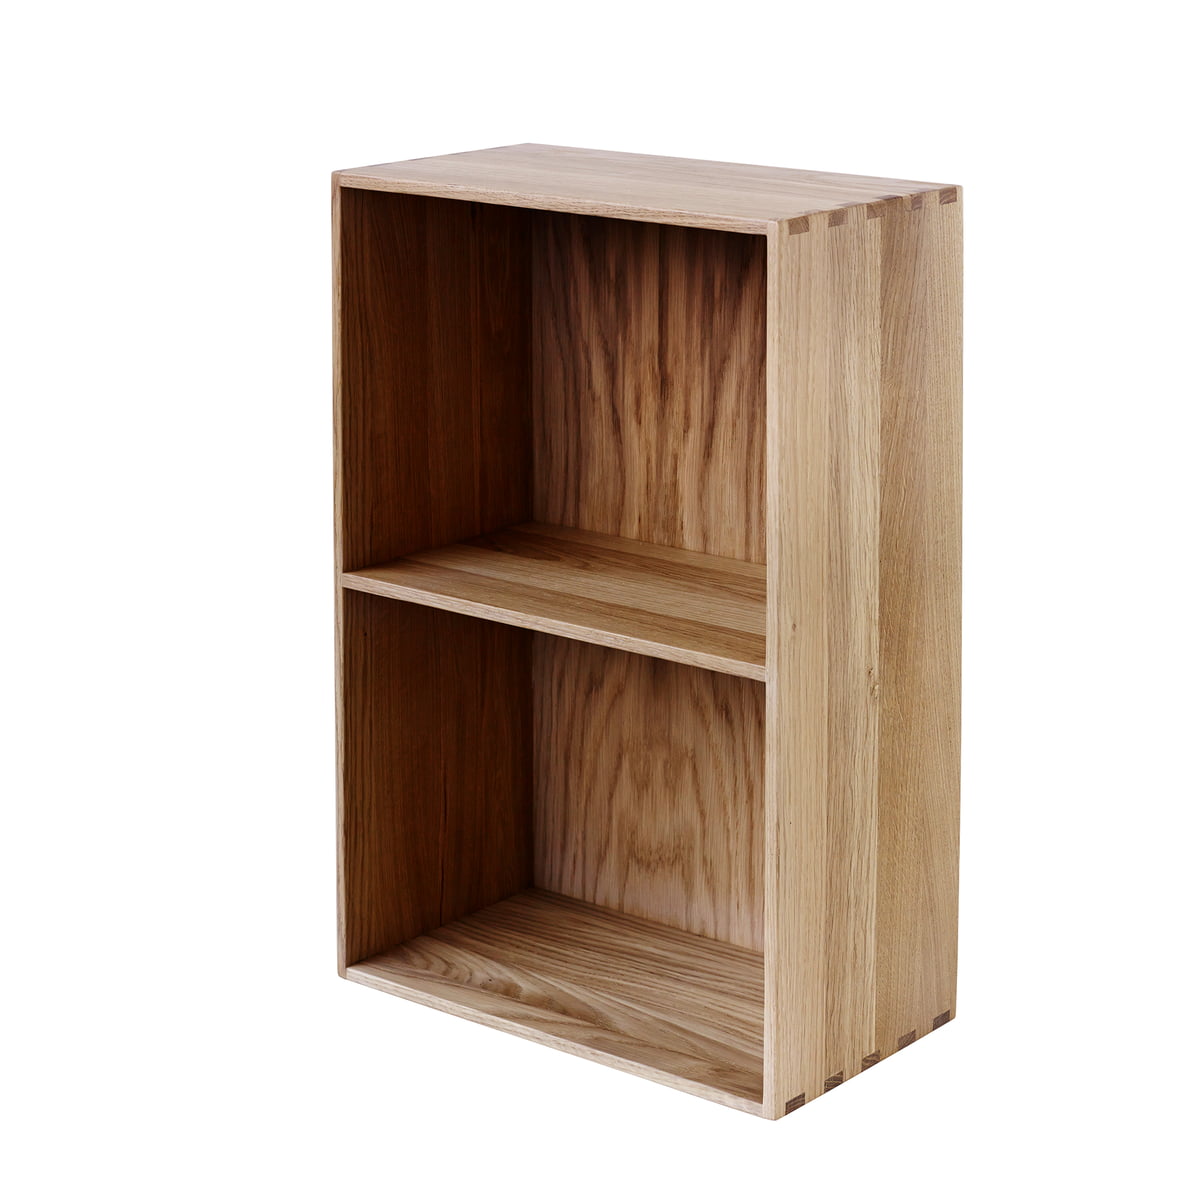 Fdb møbler - B98 bookshelf | Connox